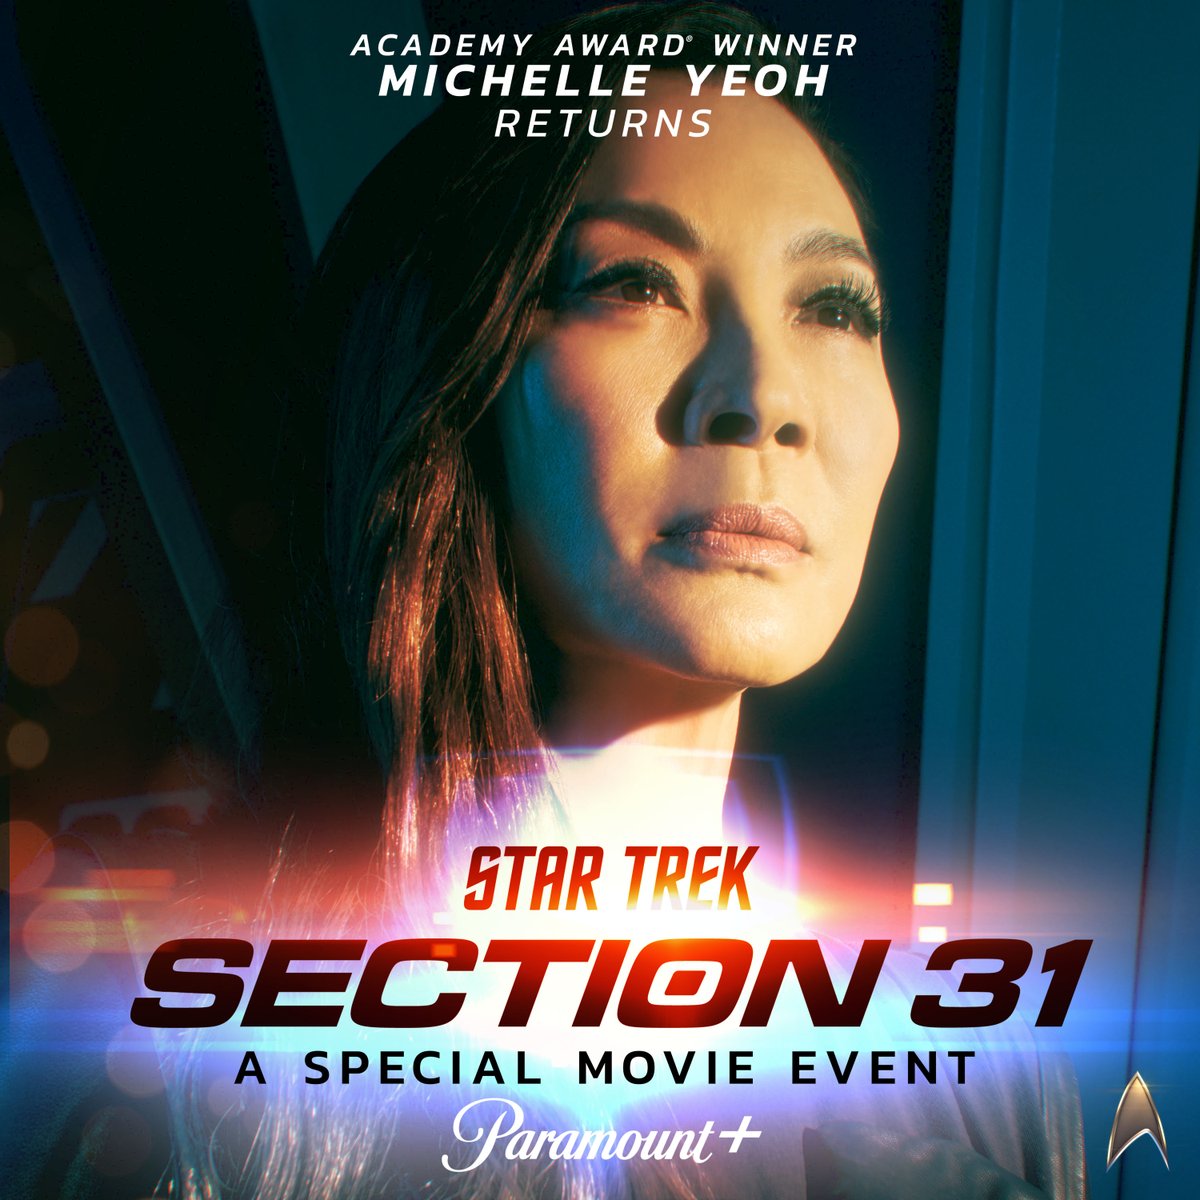 Michelle Yeoh To Return To Star Trek In ‘Section 31’ TV Movie